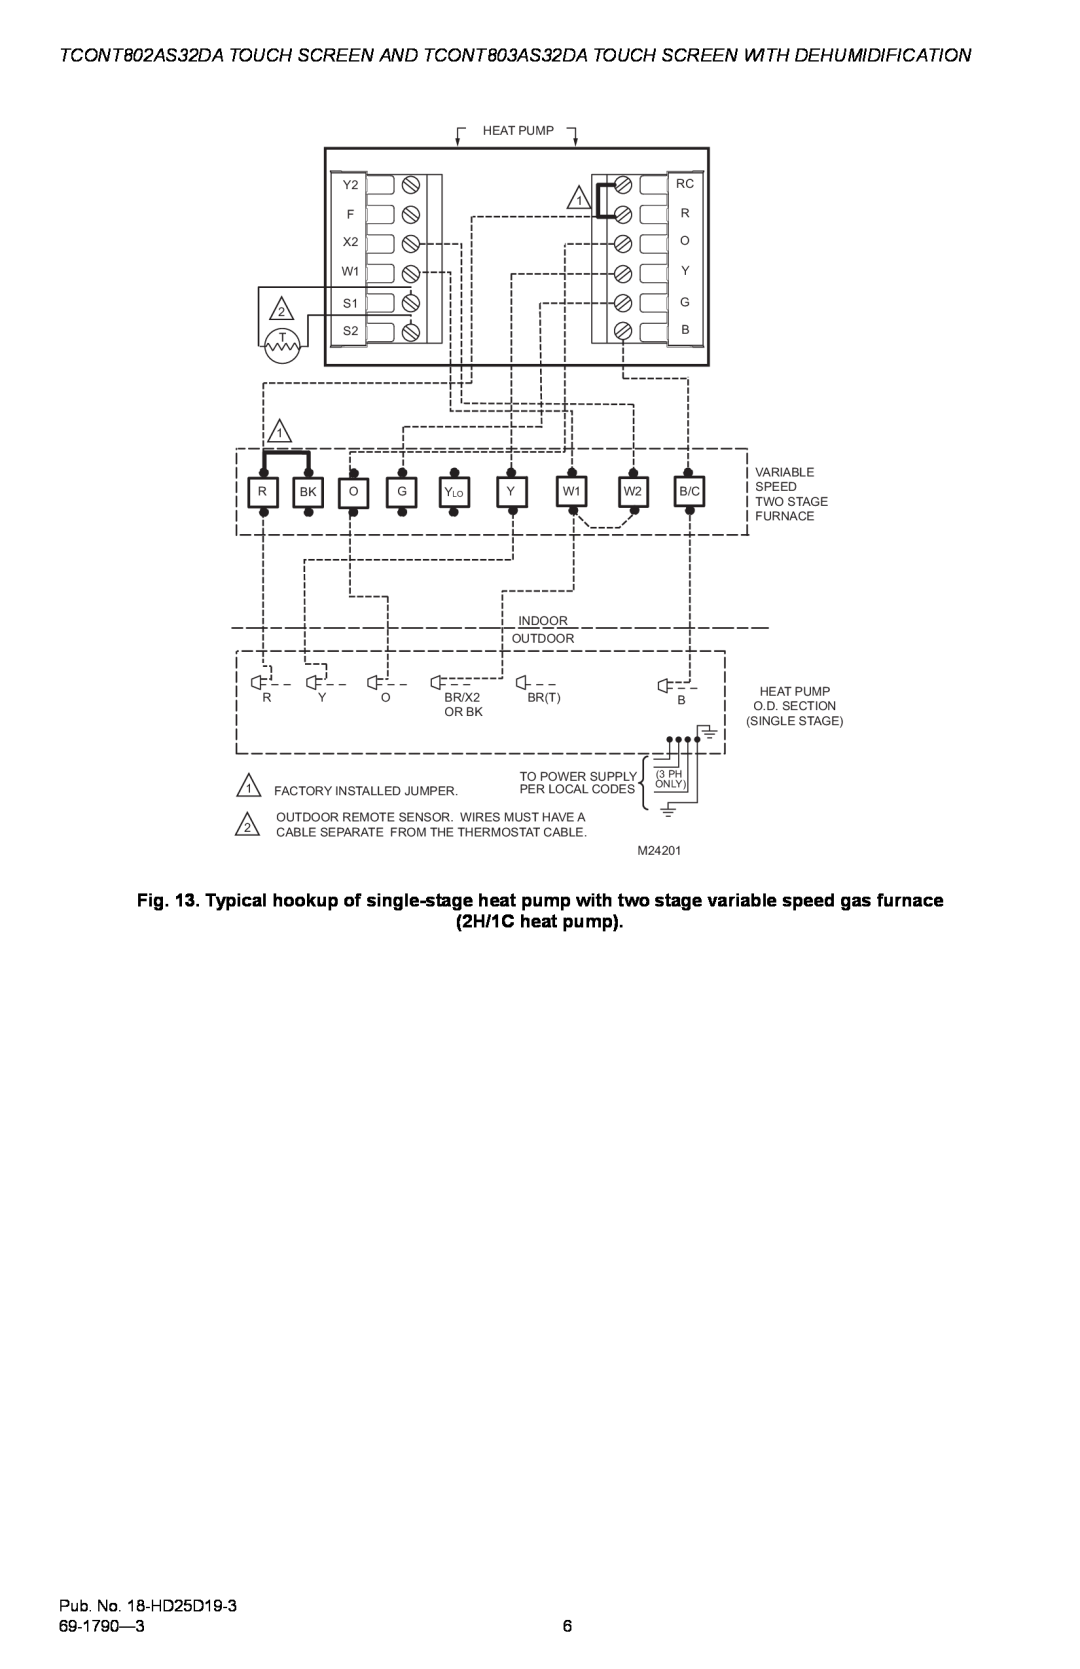 Trane TCONT803AS32DA, TCONT802AS32DA installation instructions 2H/1C heat pump, Pub. No. 18-HD25D19-3, 69-1790-3 